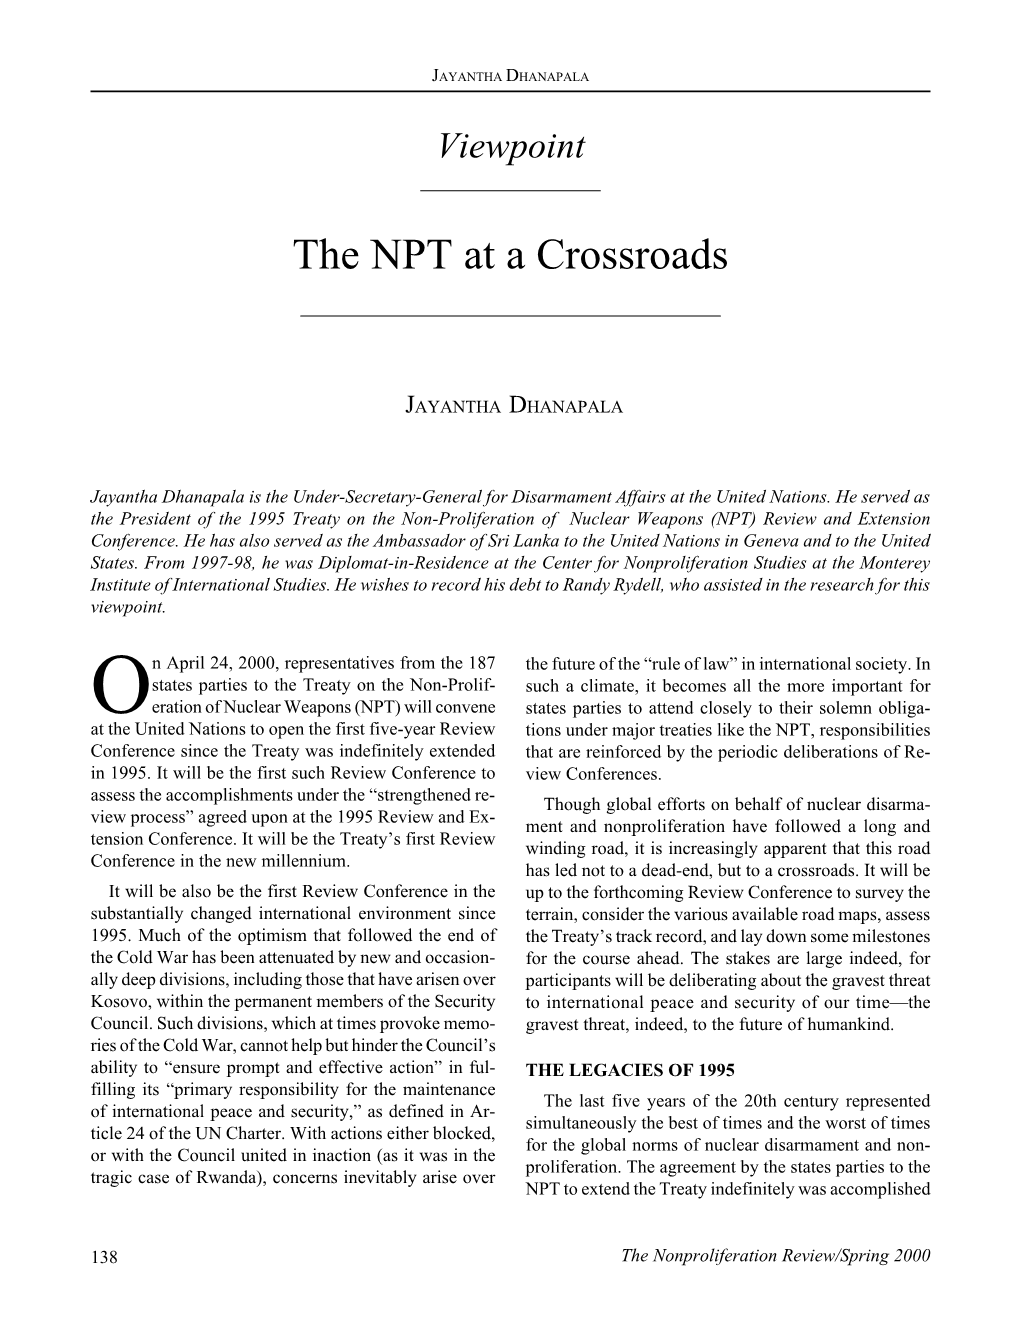 NPR 7.1: the NPT at a Crossroads